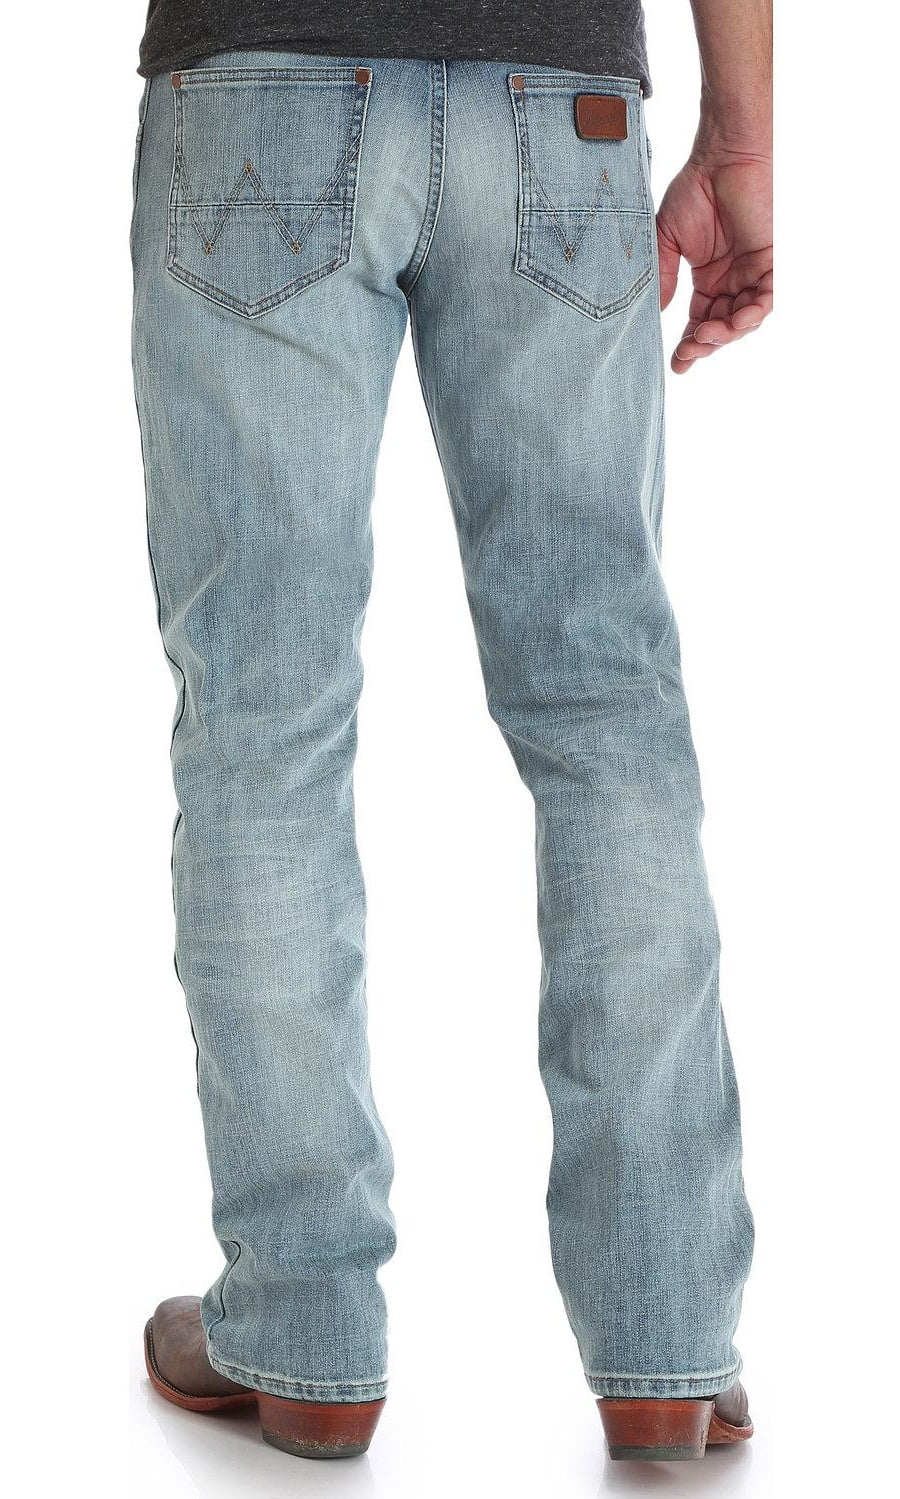 wrangler bootcut jeans walmart